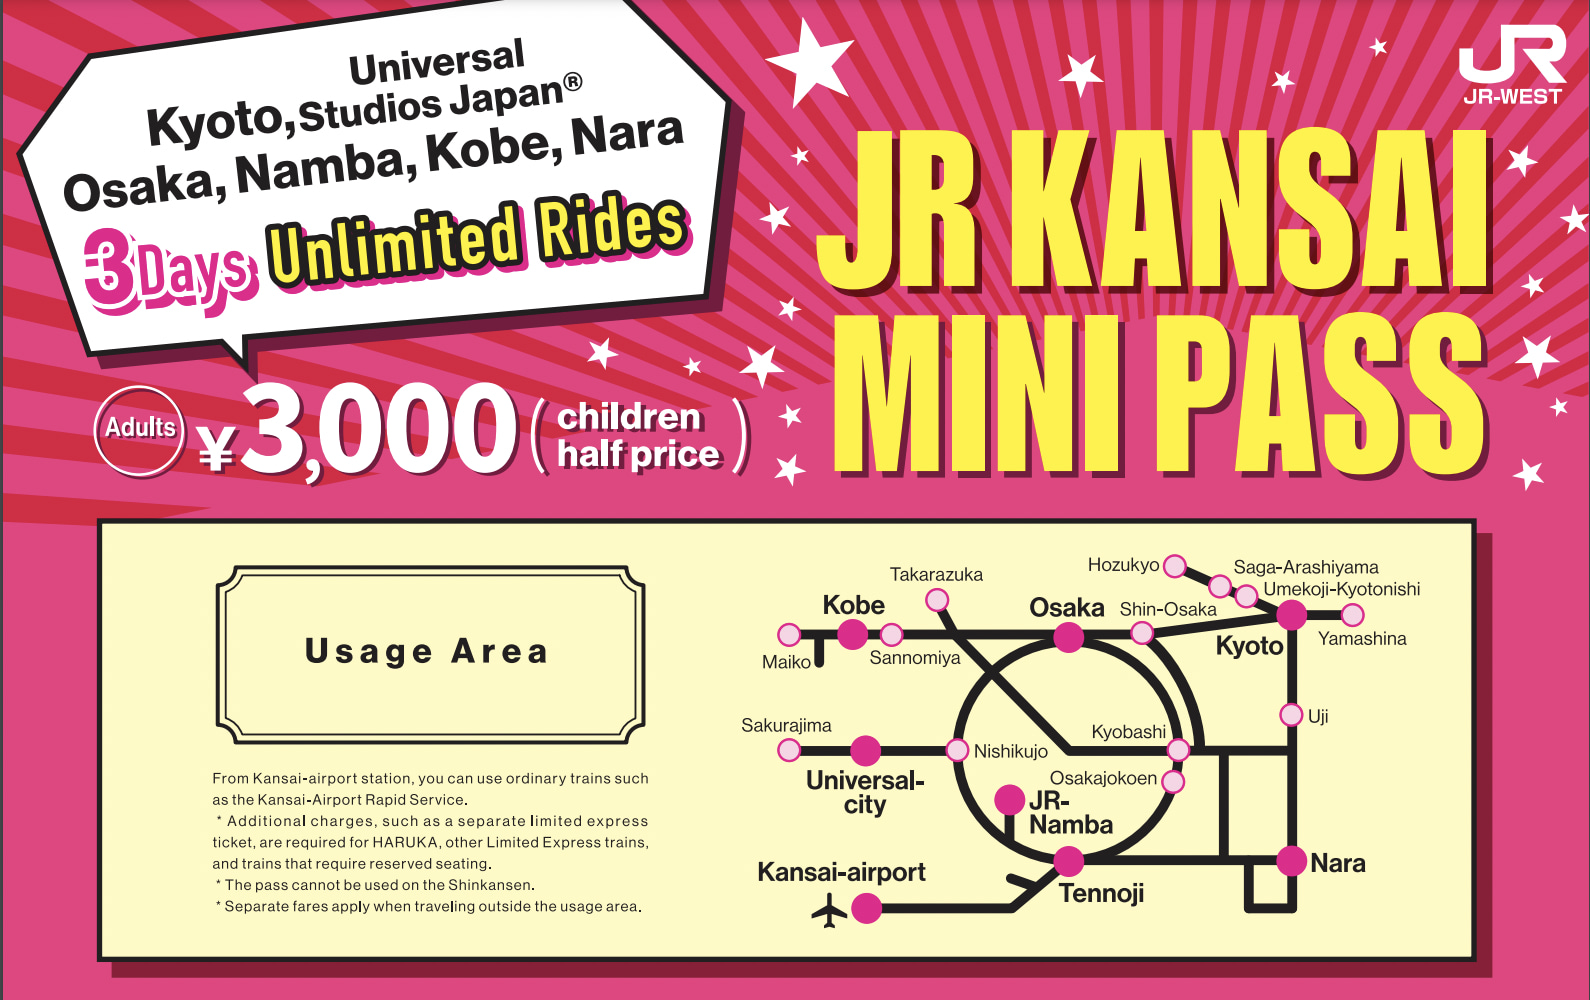 JR Kansai Mini Pass